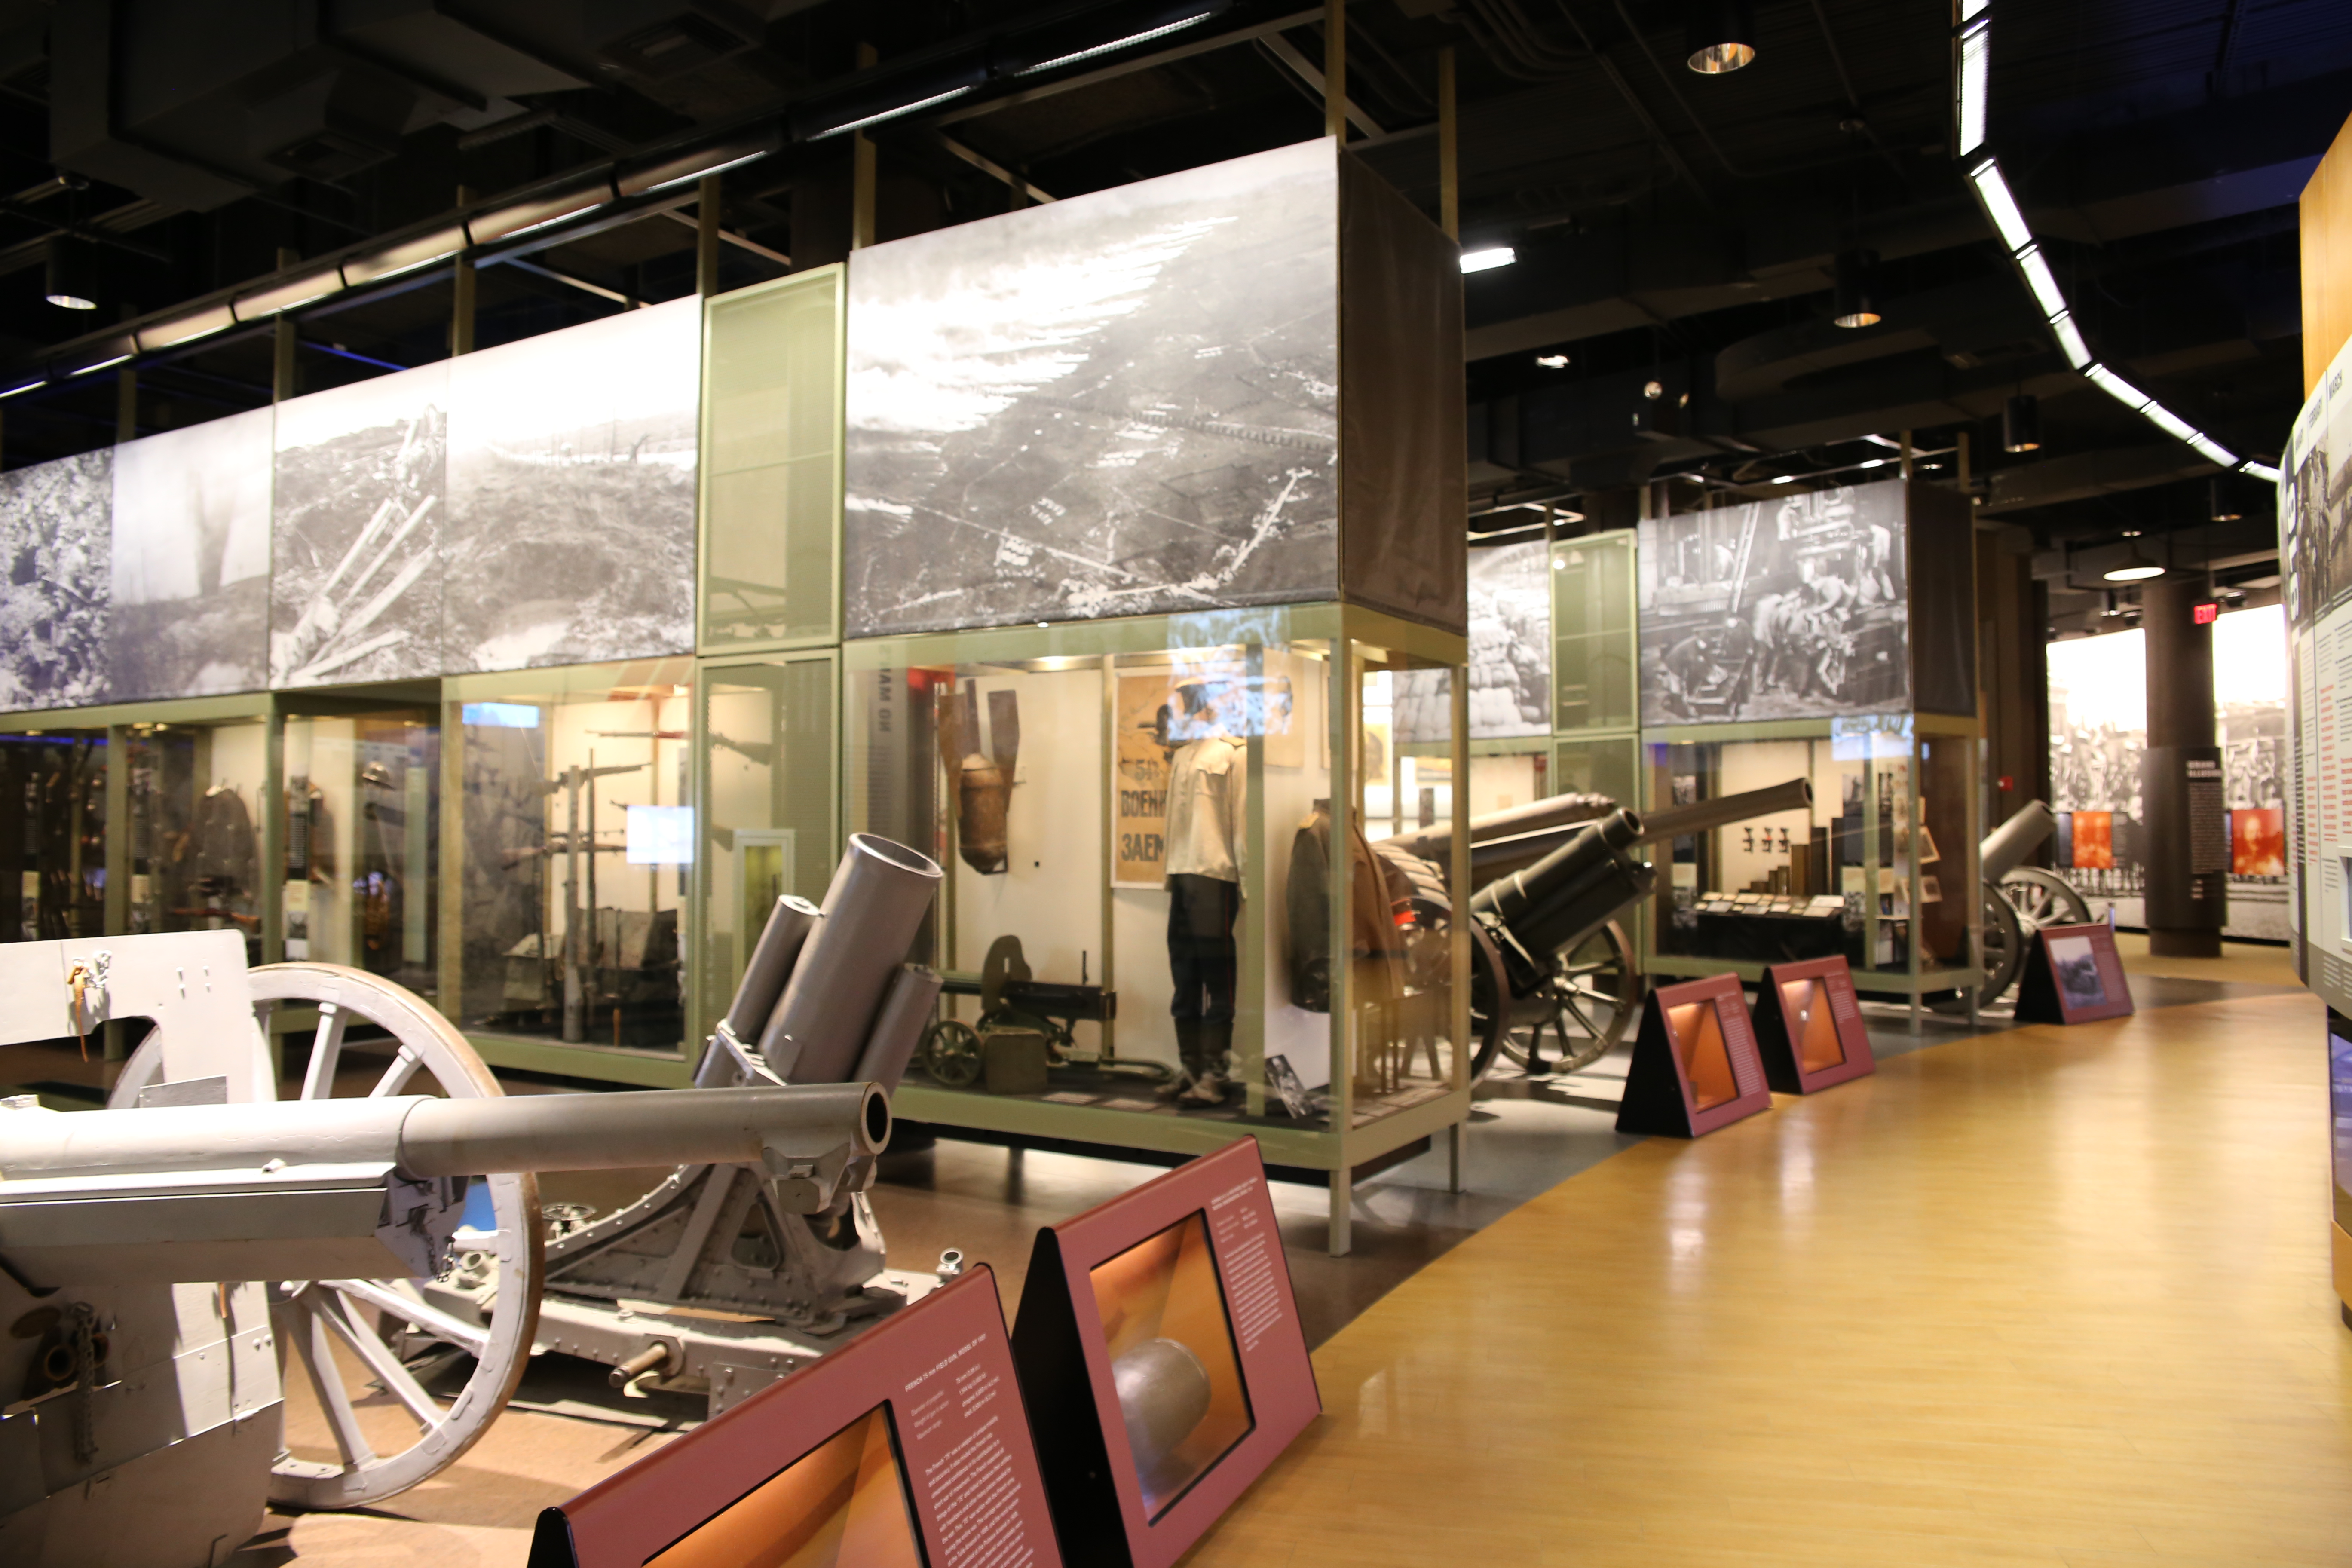 Artillery pieces in the Main Gallery